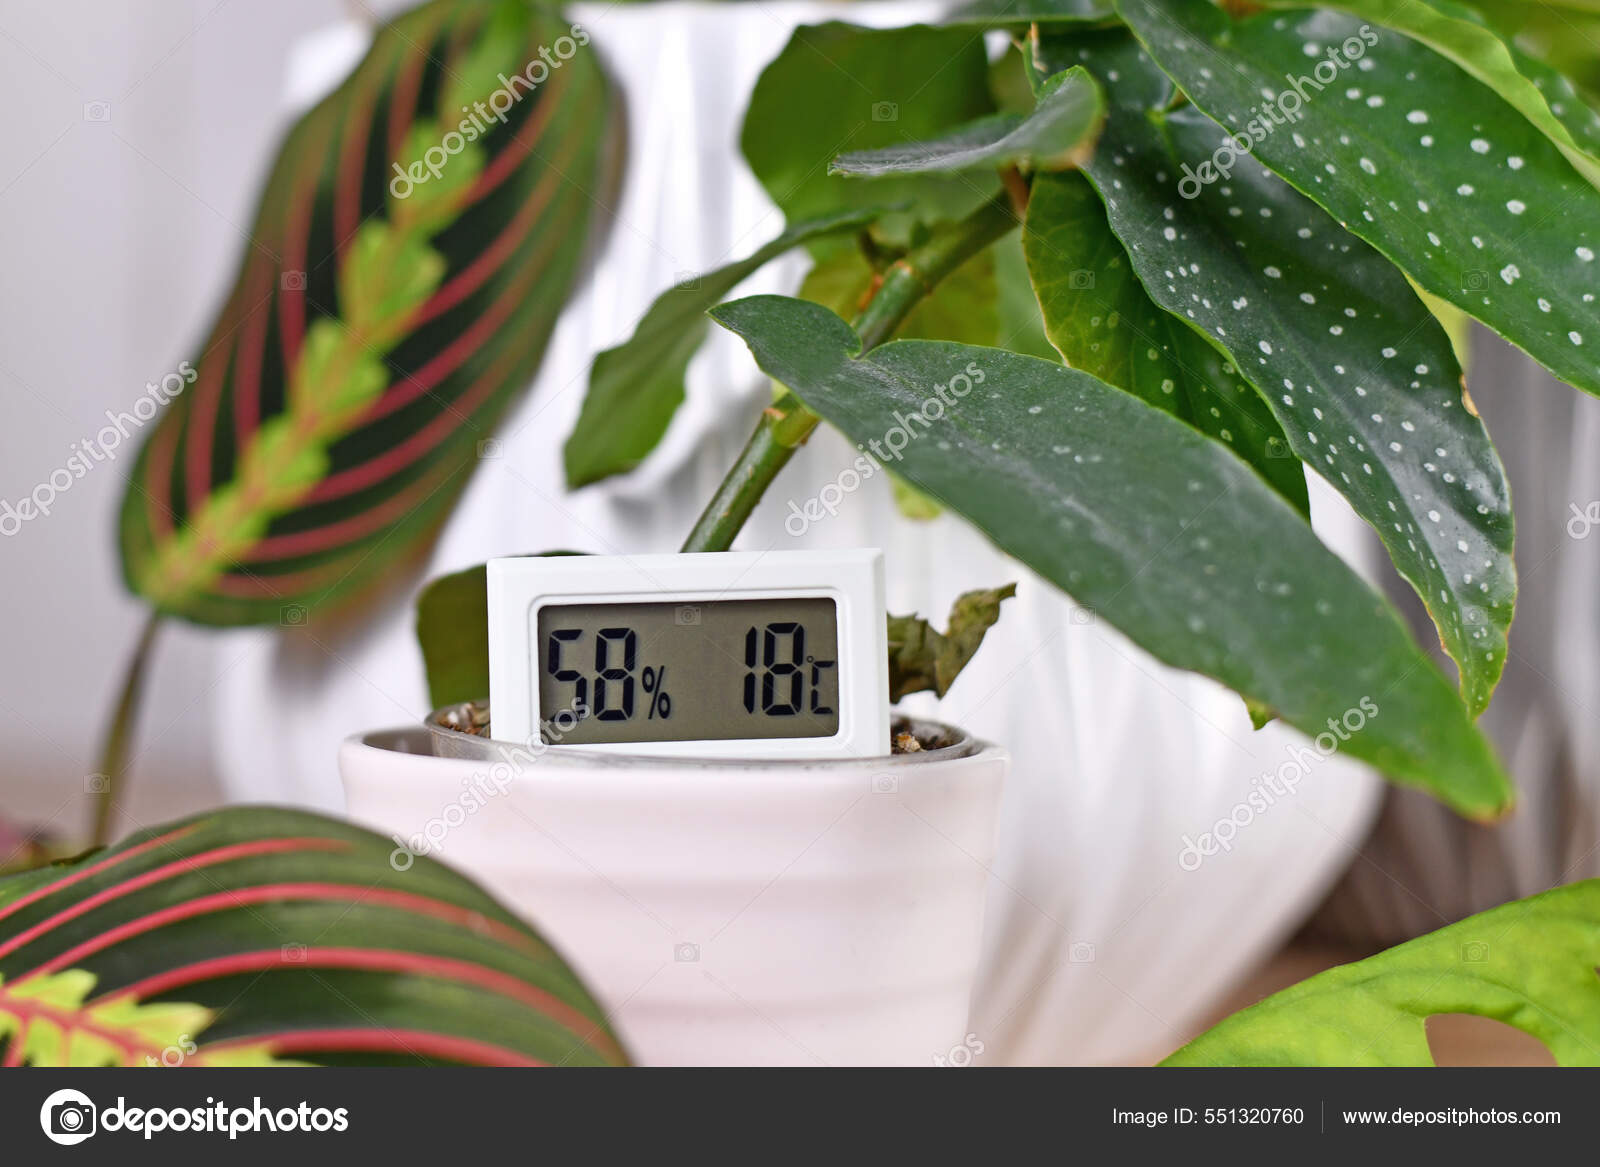 https://st.depositphotos.com/39974074/55132/i/1600/depositphotos_551320760-stock-photo-hygrometer-thermometer-device-measure-humidity.jpg